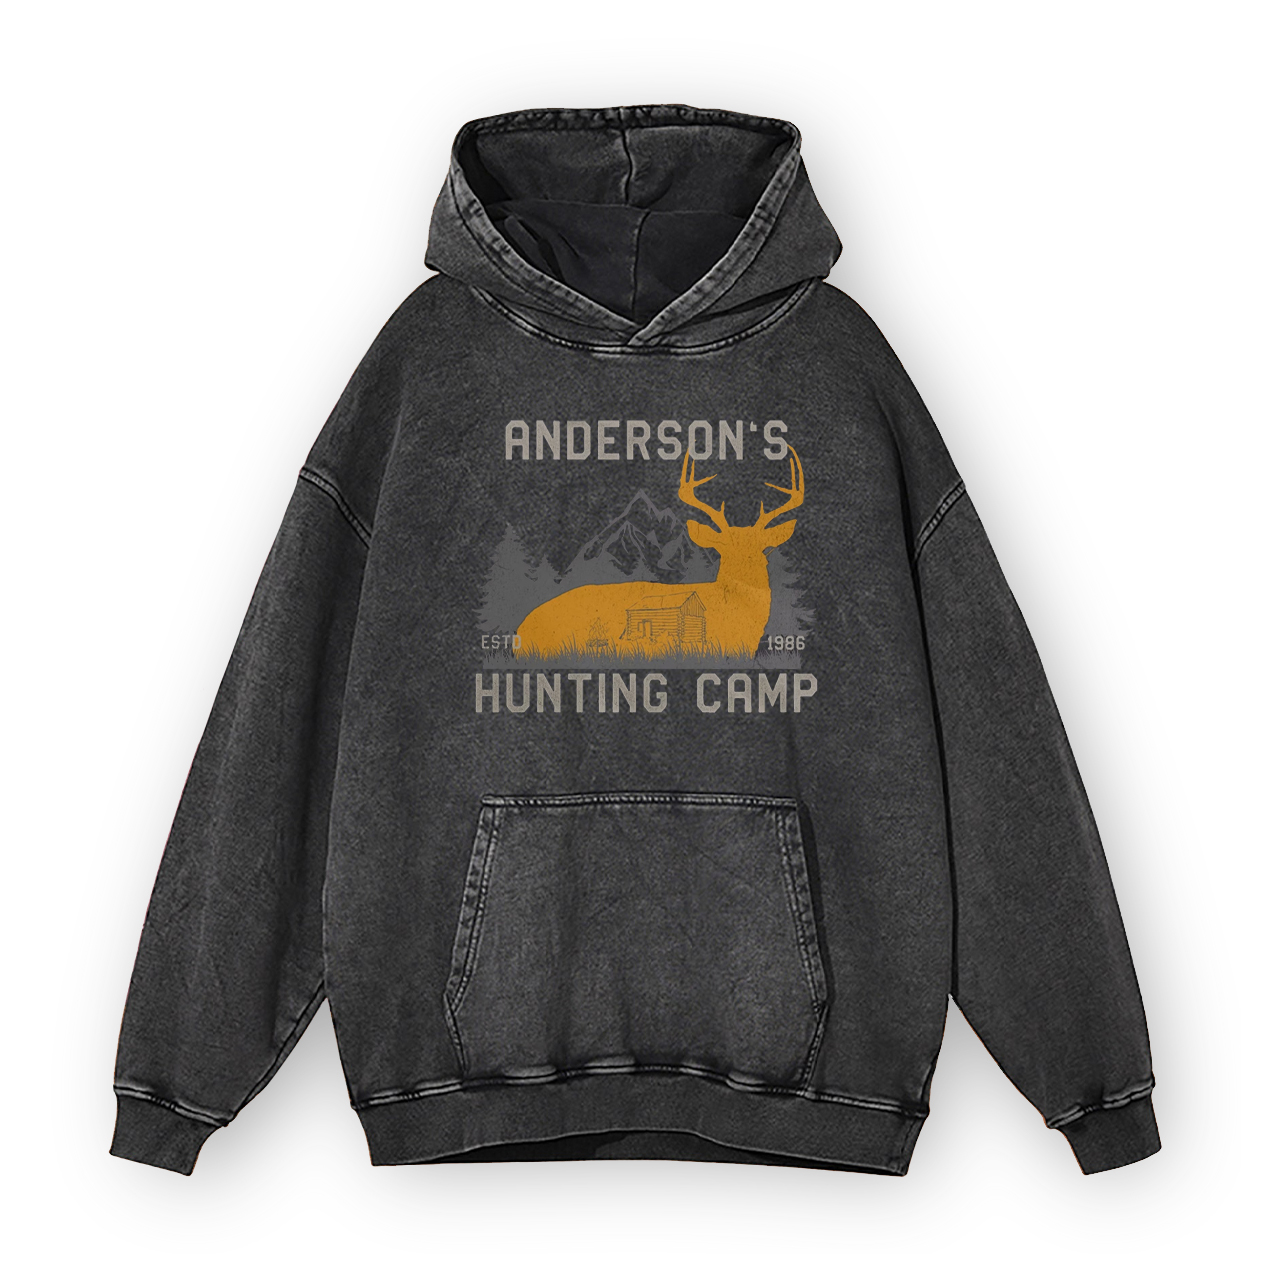 Personalized Hunting Camp Garment-Dye Hoodies